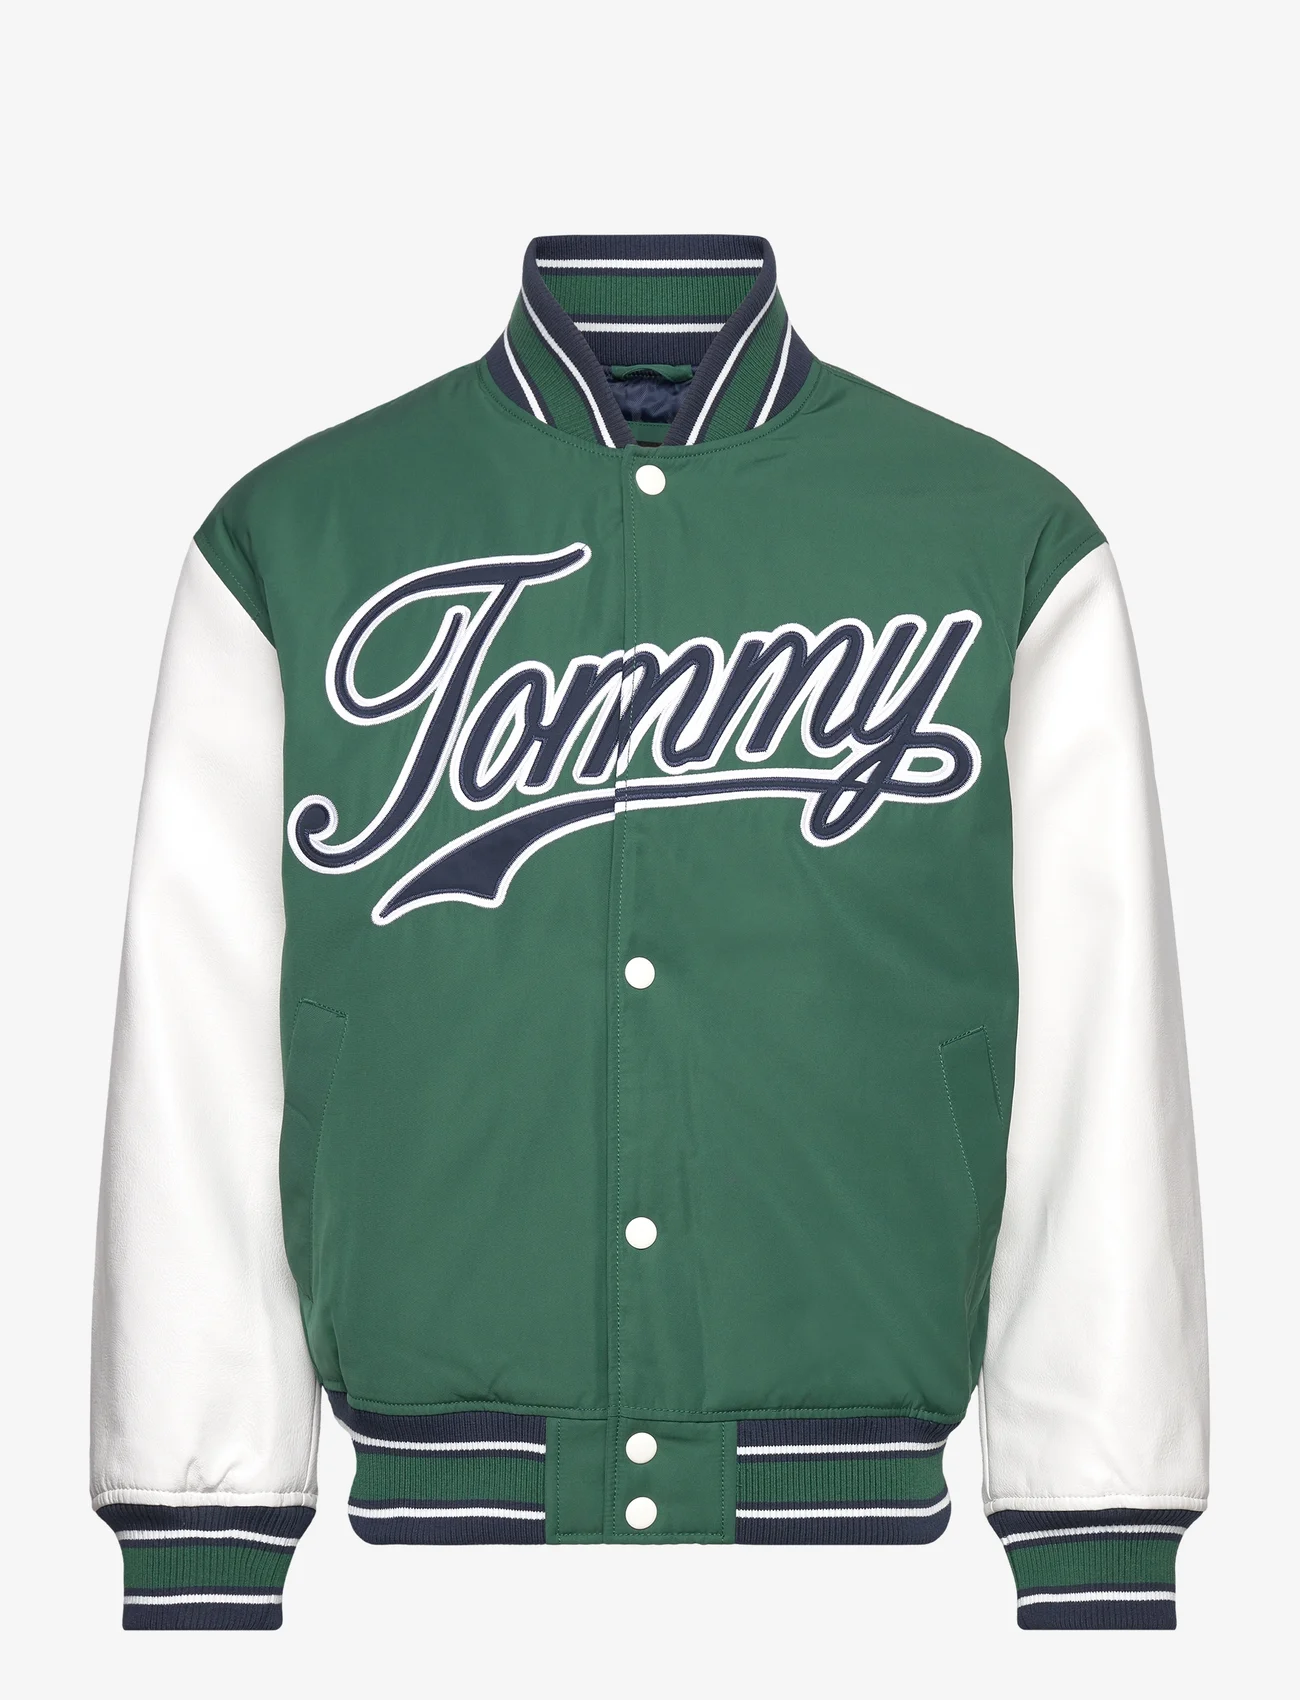 Tommy Jeans - TJM LETTERMAN JACKET EXT - wiosenne kurtki - court green / multi - 0